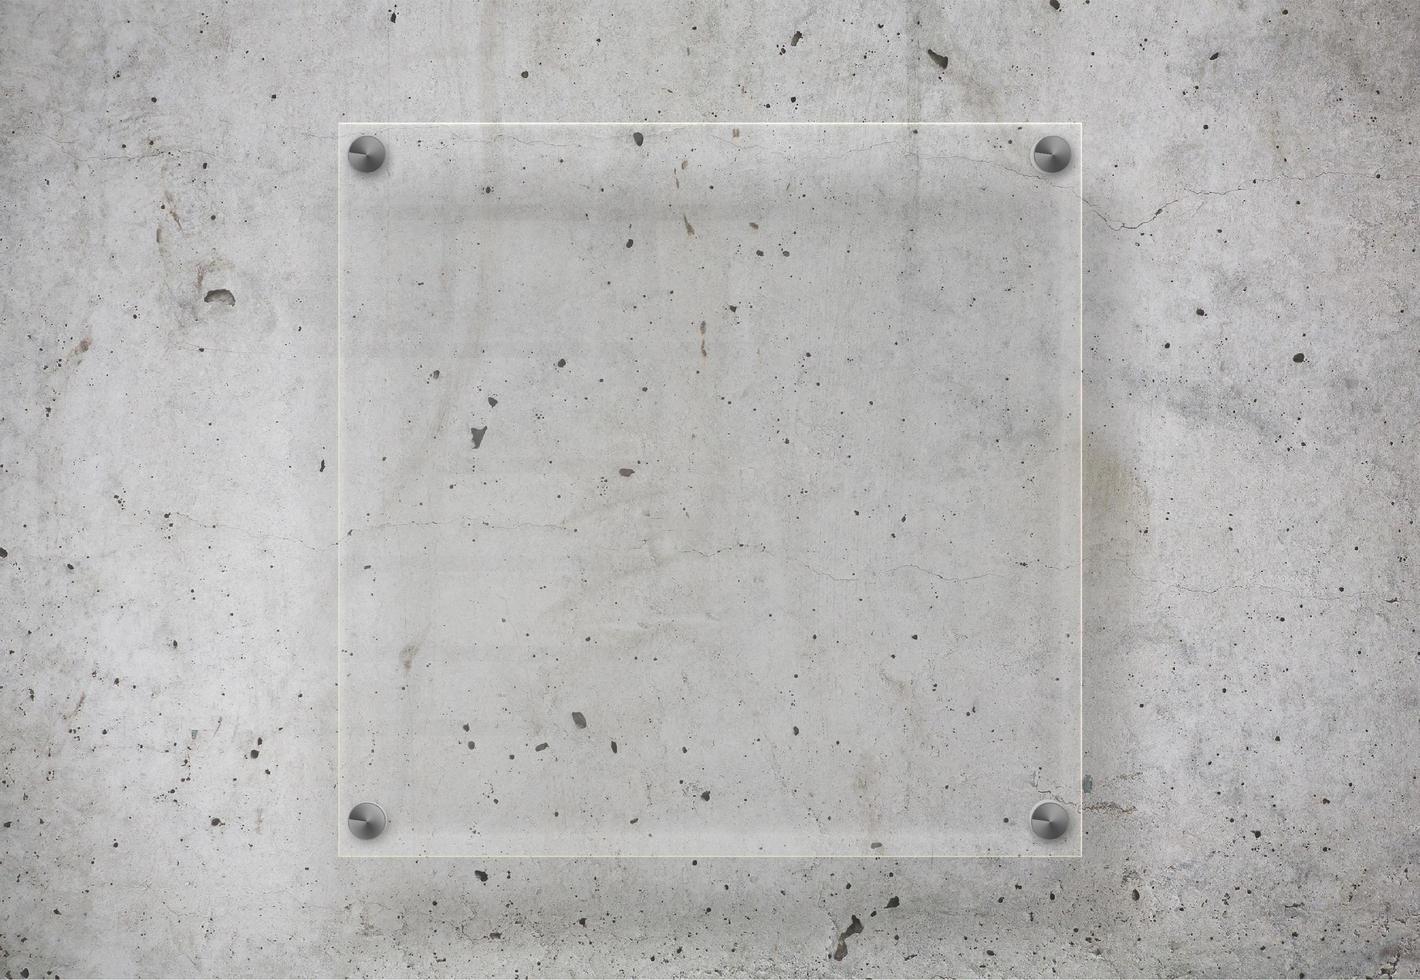 Transparent plate on concrete surface photo